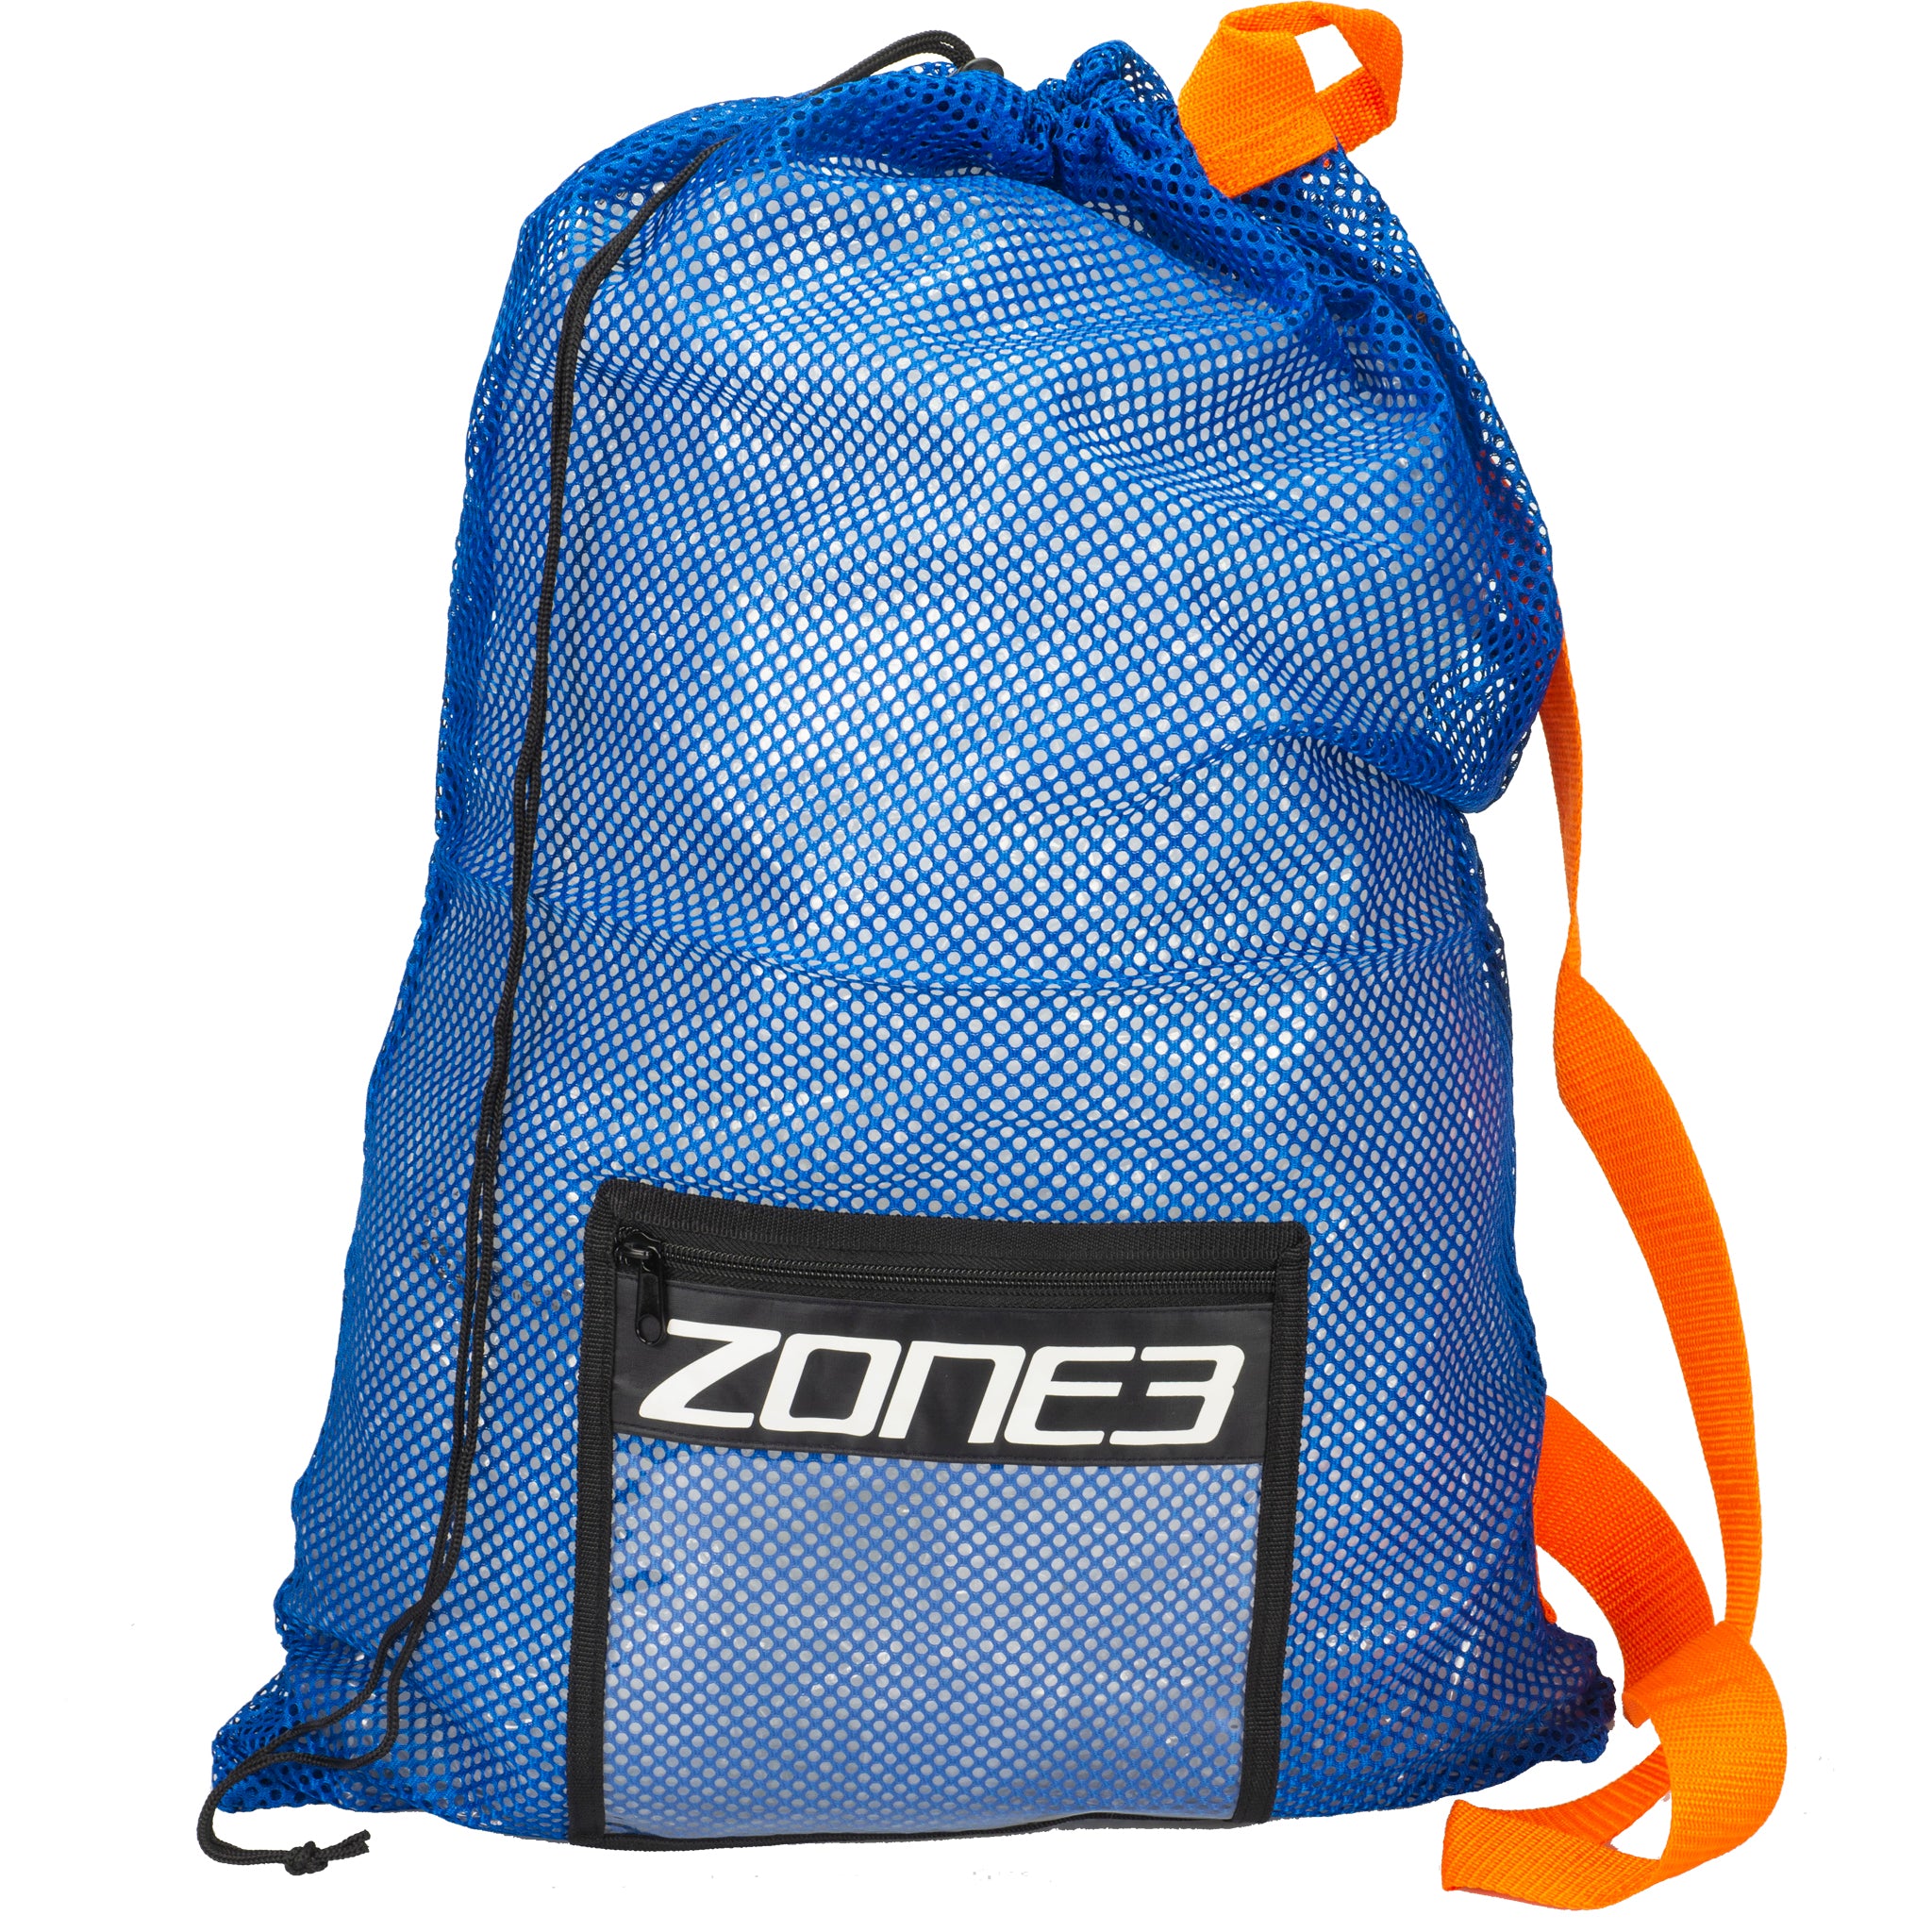 Zone3 Mesh Swim Training Aids Pool Kit Bag